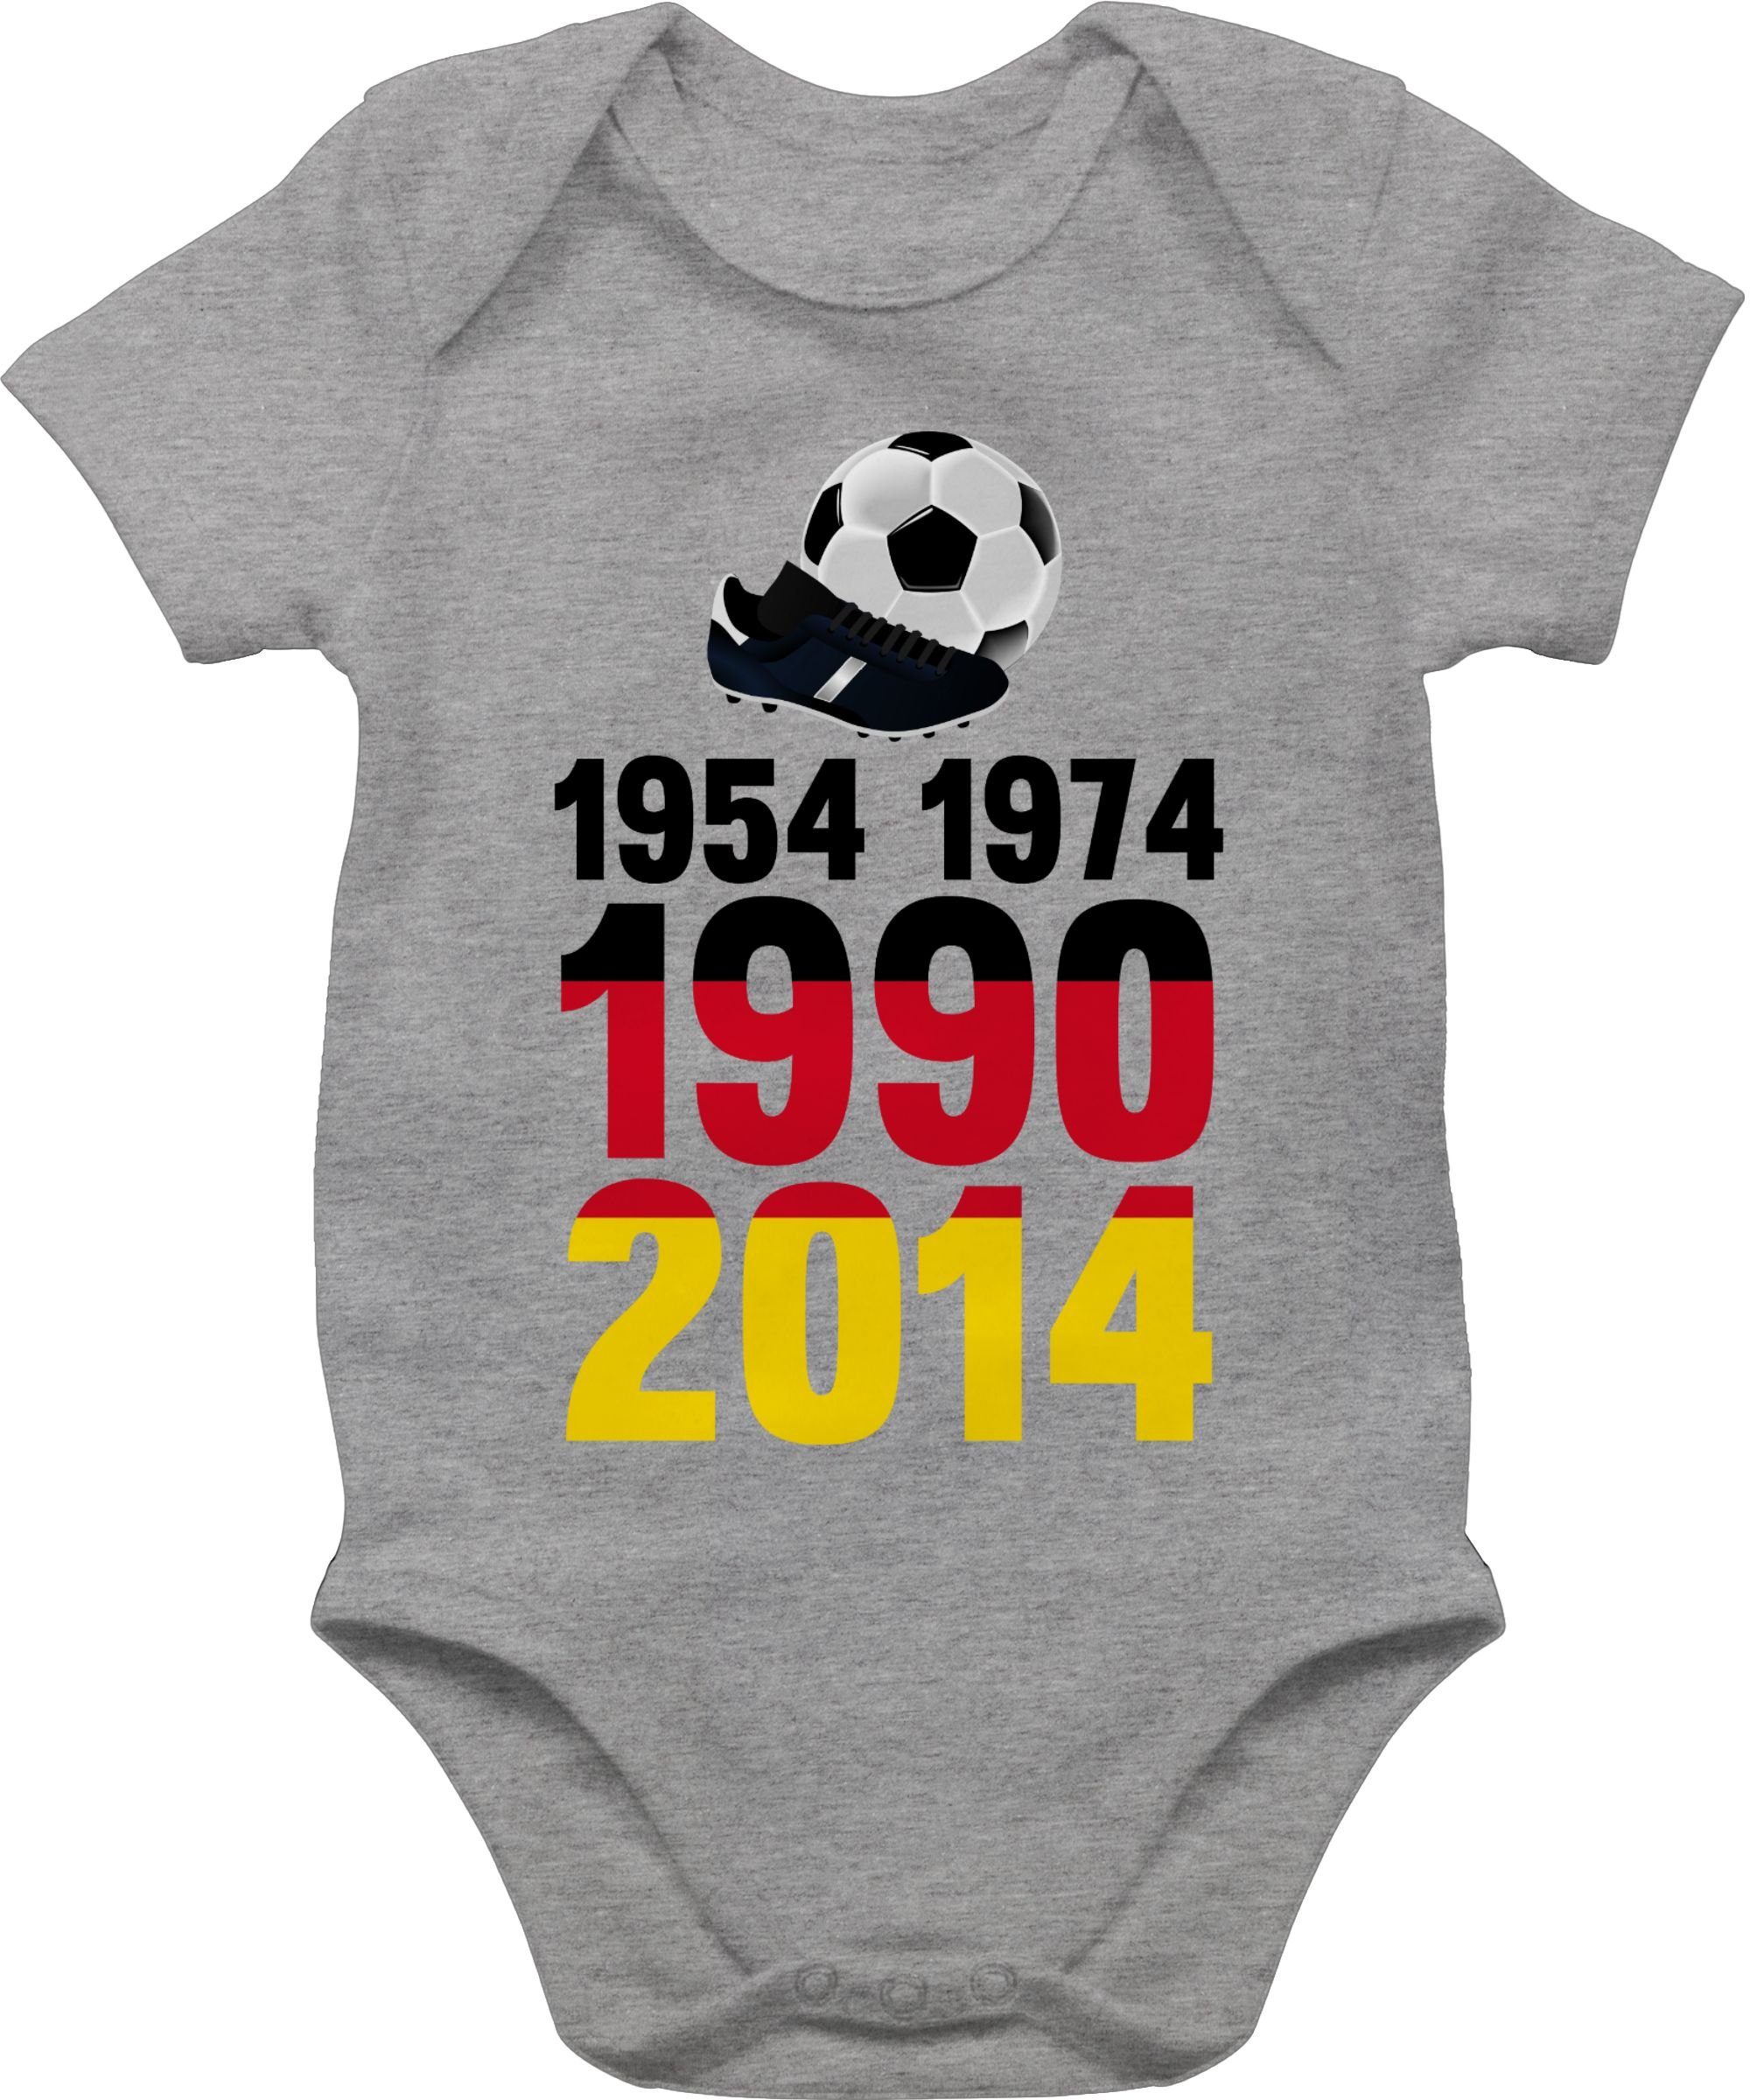 Shirtracer Shirtbody 1954, 1974, 1990, 2014 - WM 2022 Weltmeister Deutschland Fussball EM 2024 Baby 2 Grau meliert